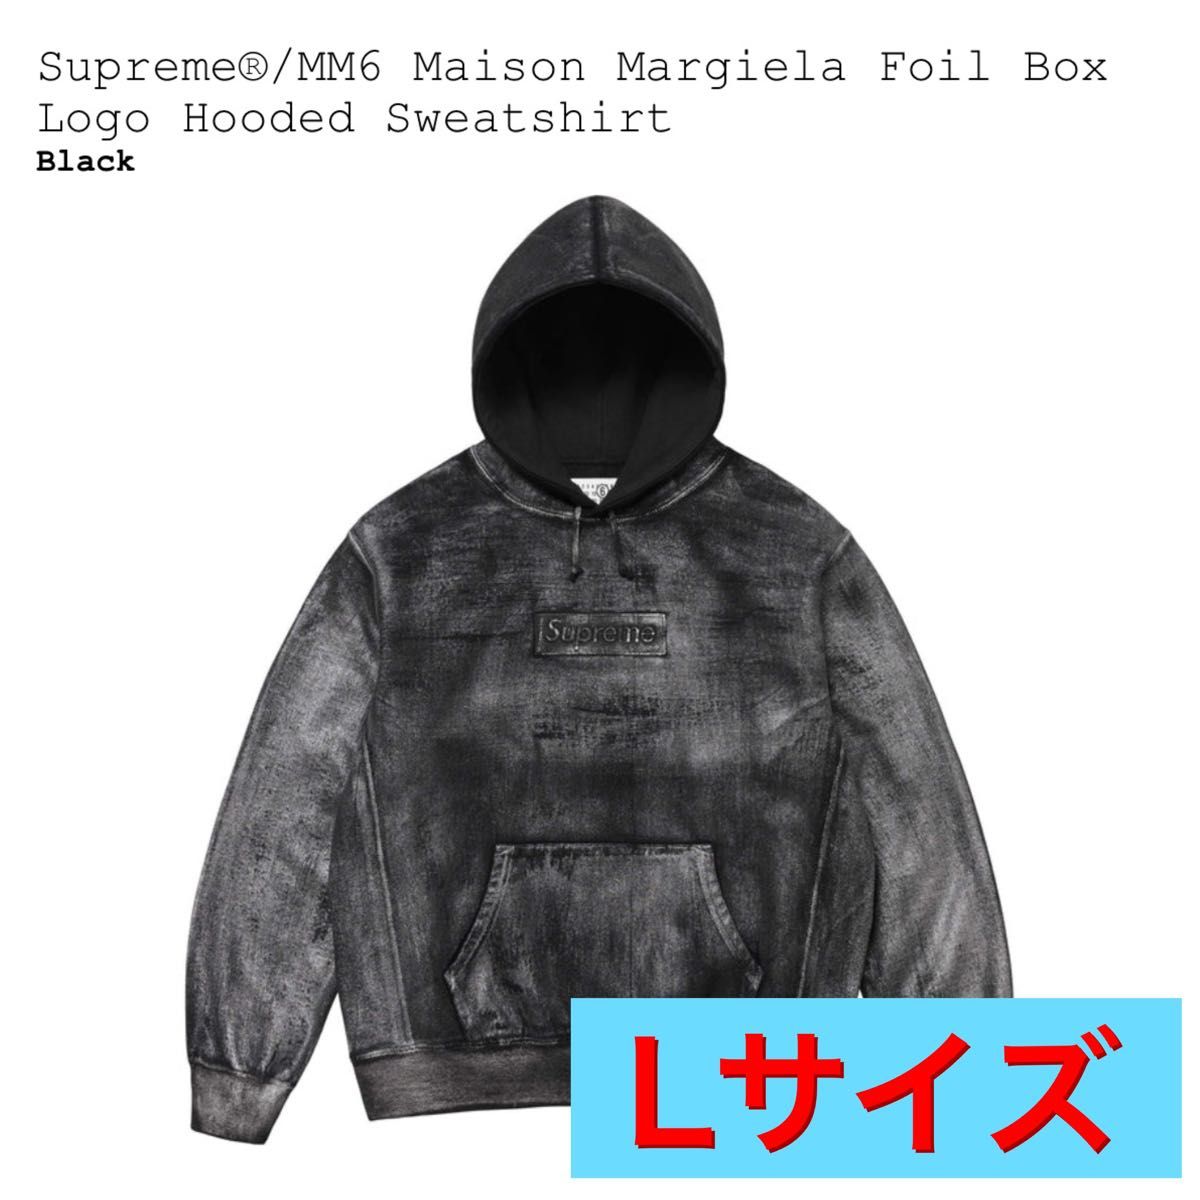 Supreme Maison Margiela Foil Box Logo Hooded Sweatshirt シュプリーム